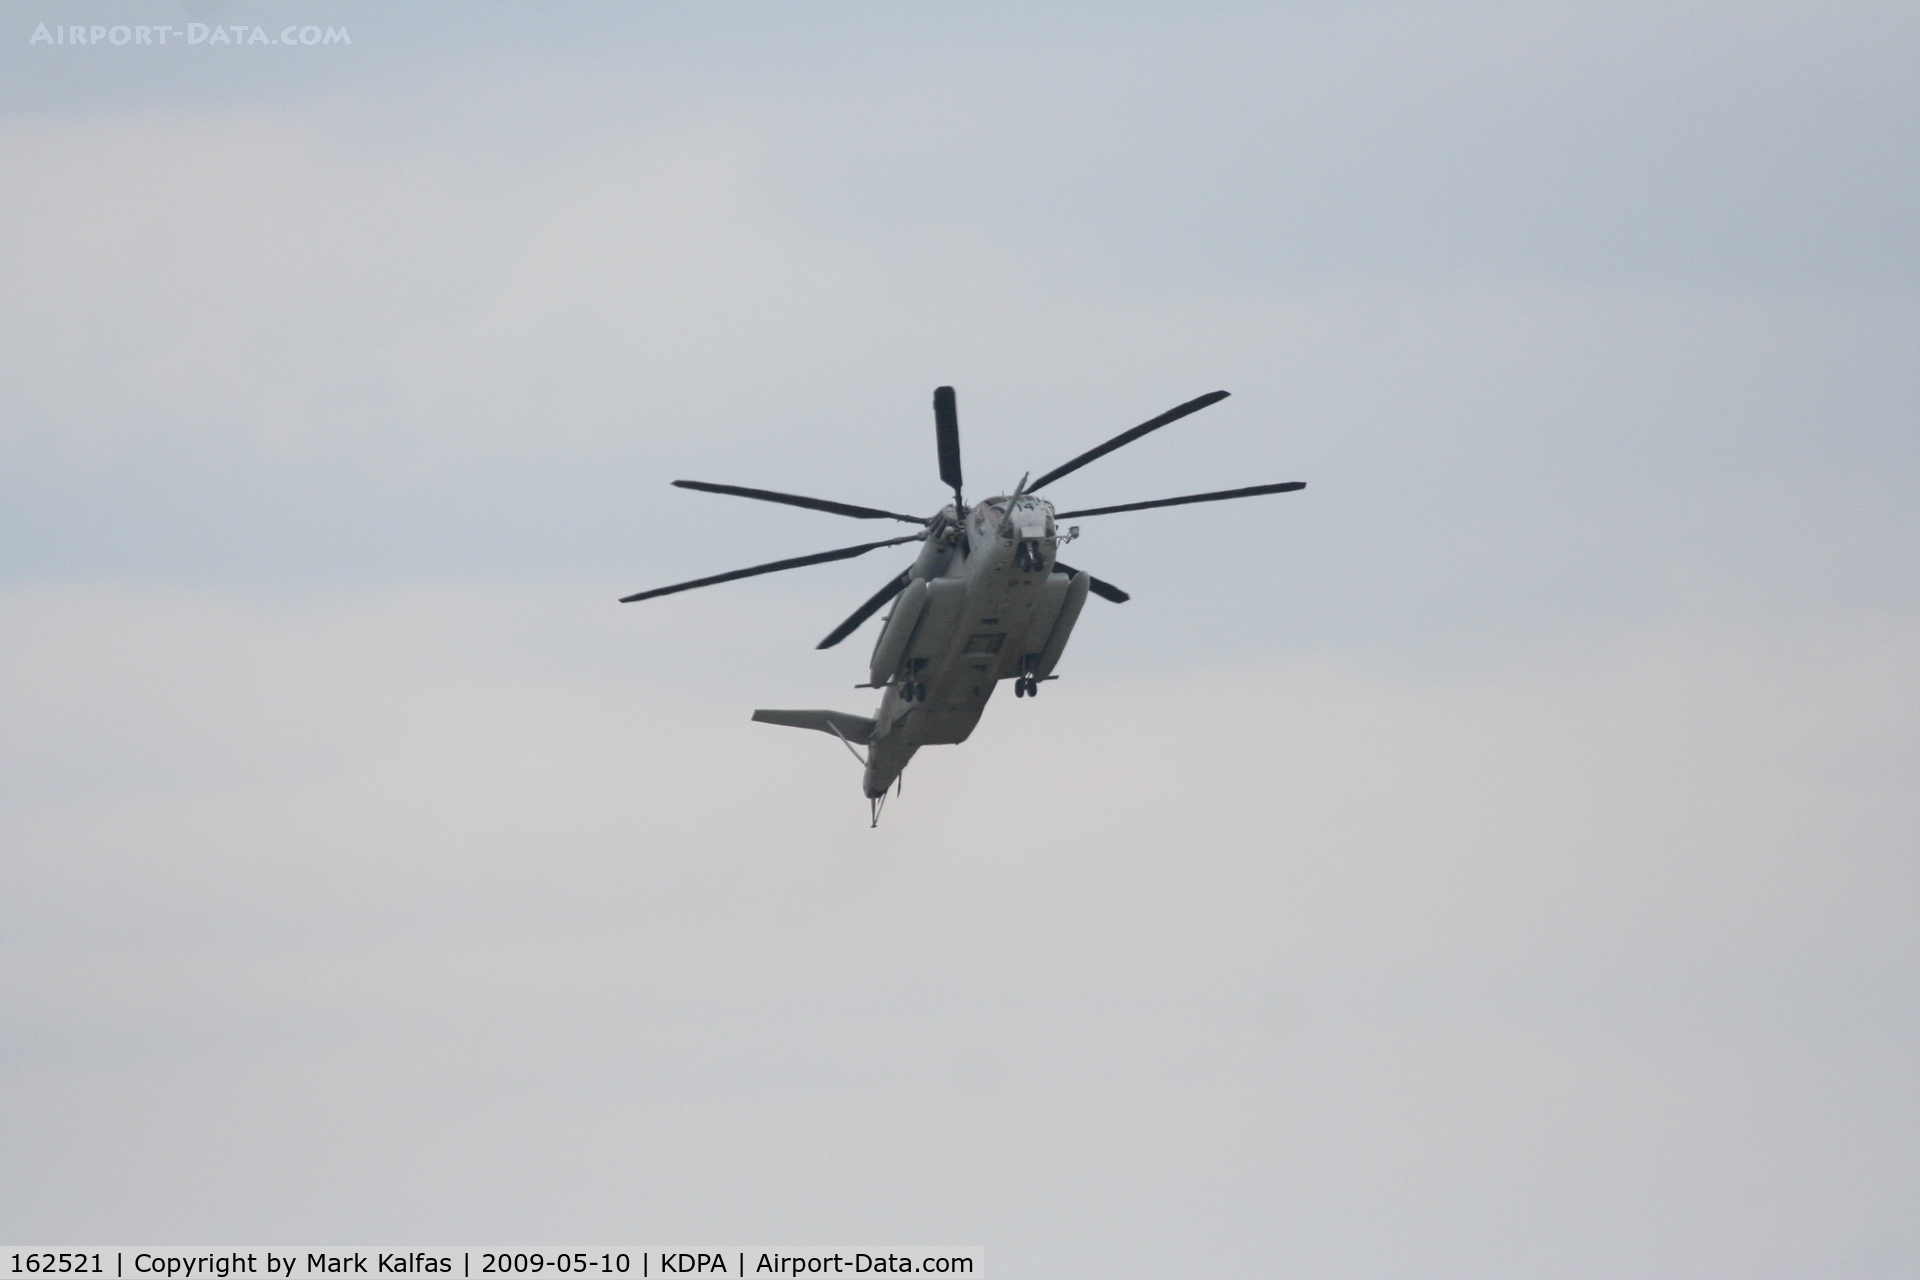 162521, Sikorsky CH-53E Super Stallion C/N 65-527, CH-53 Super Stallion, 162521/HMH-461 KDPA